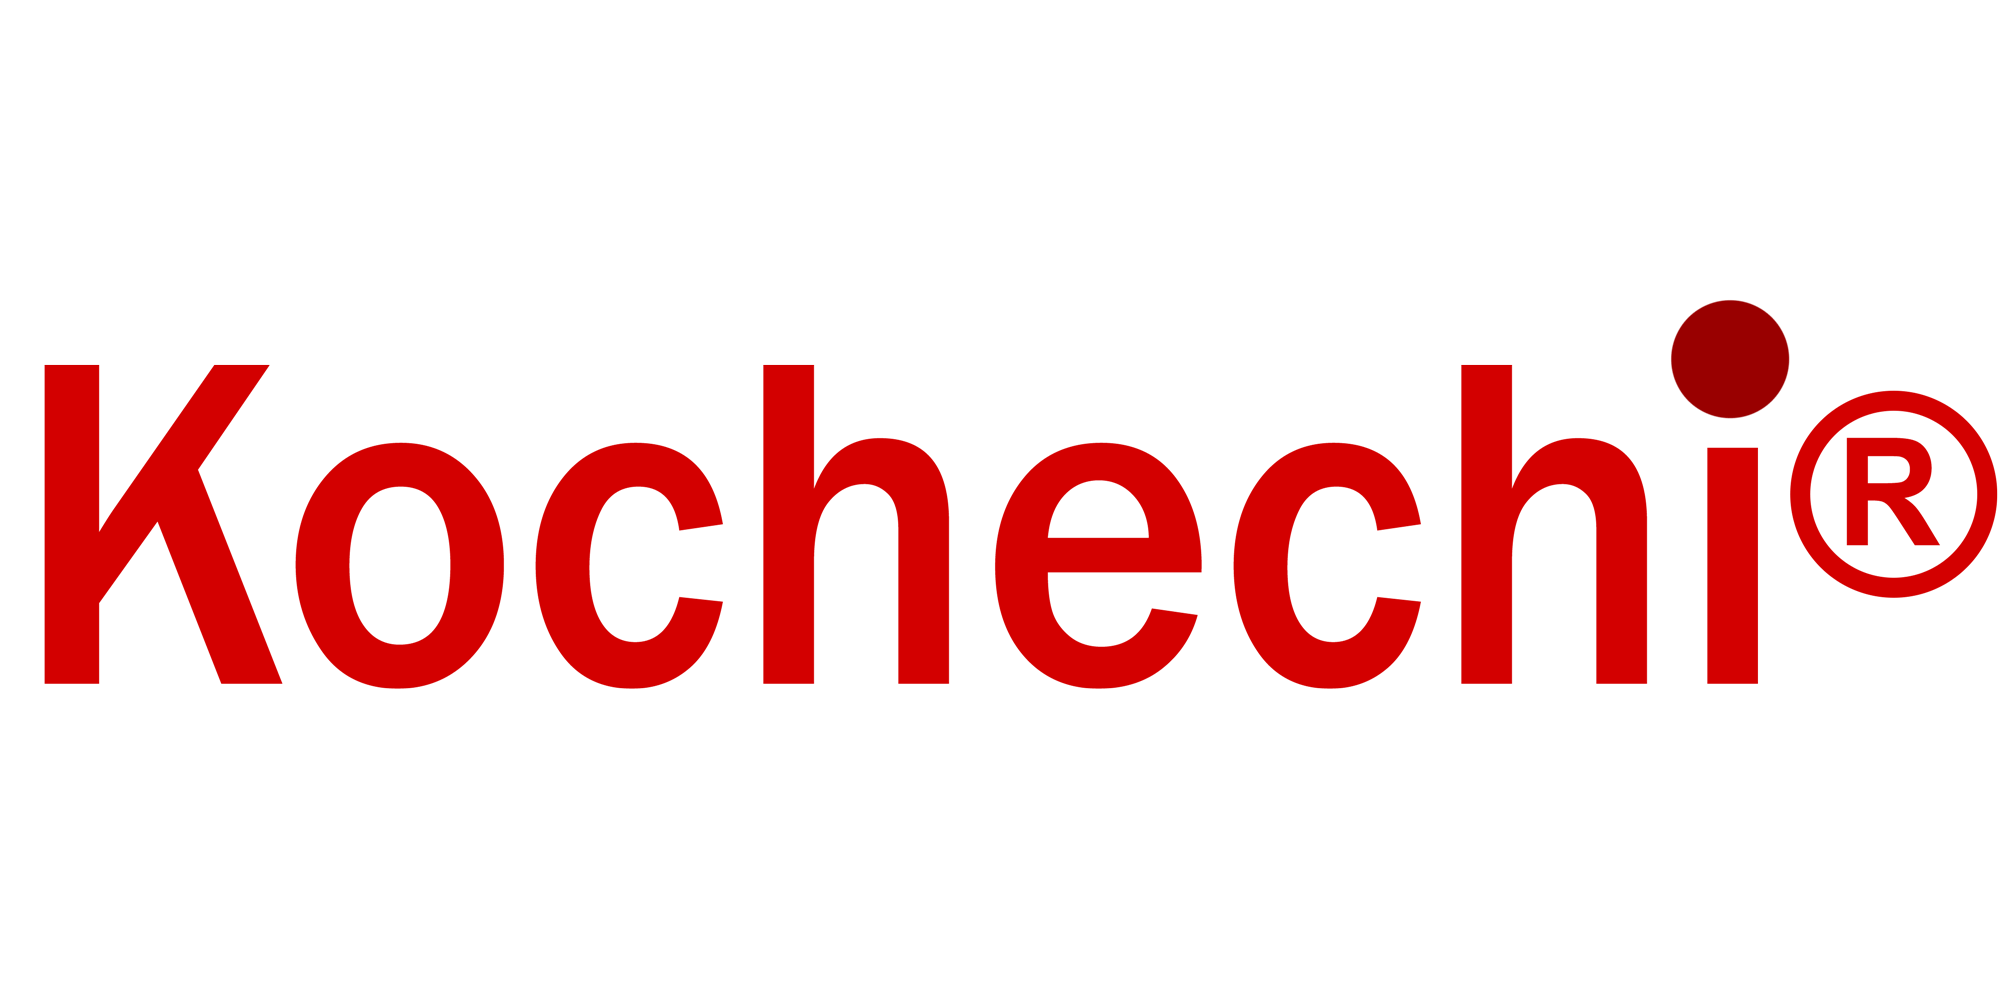 Kochechi